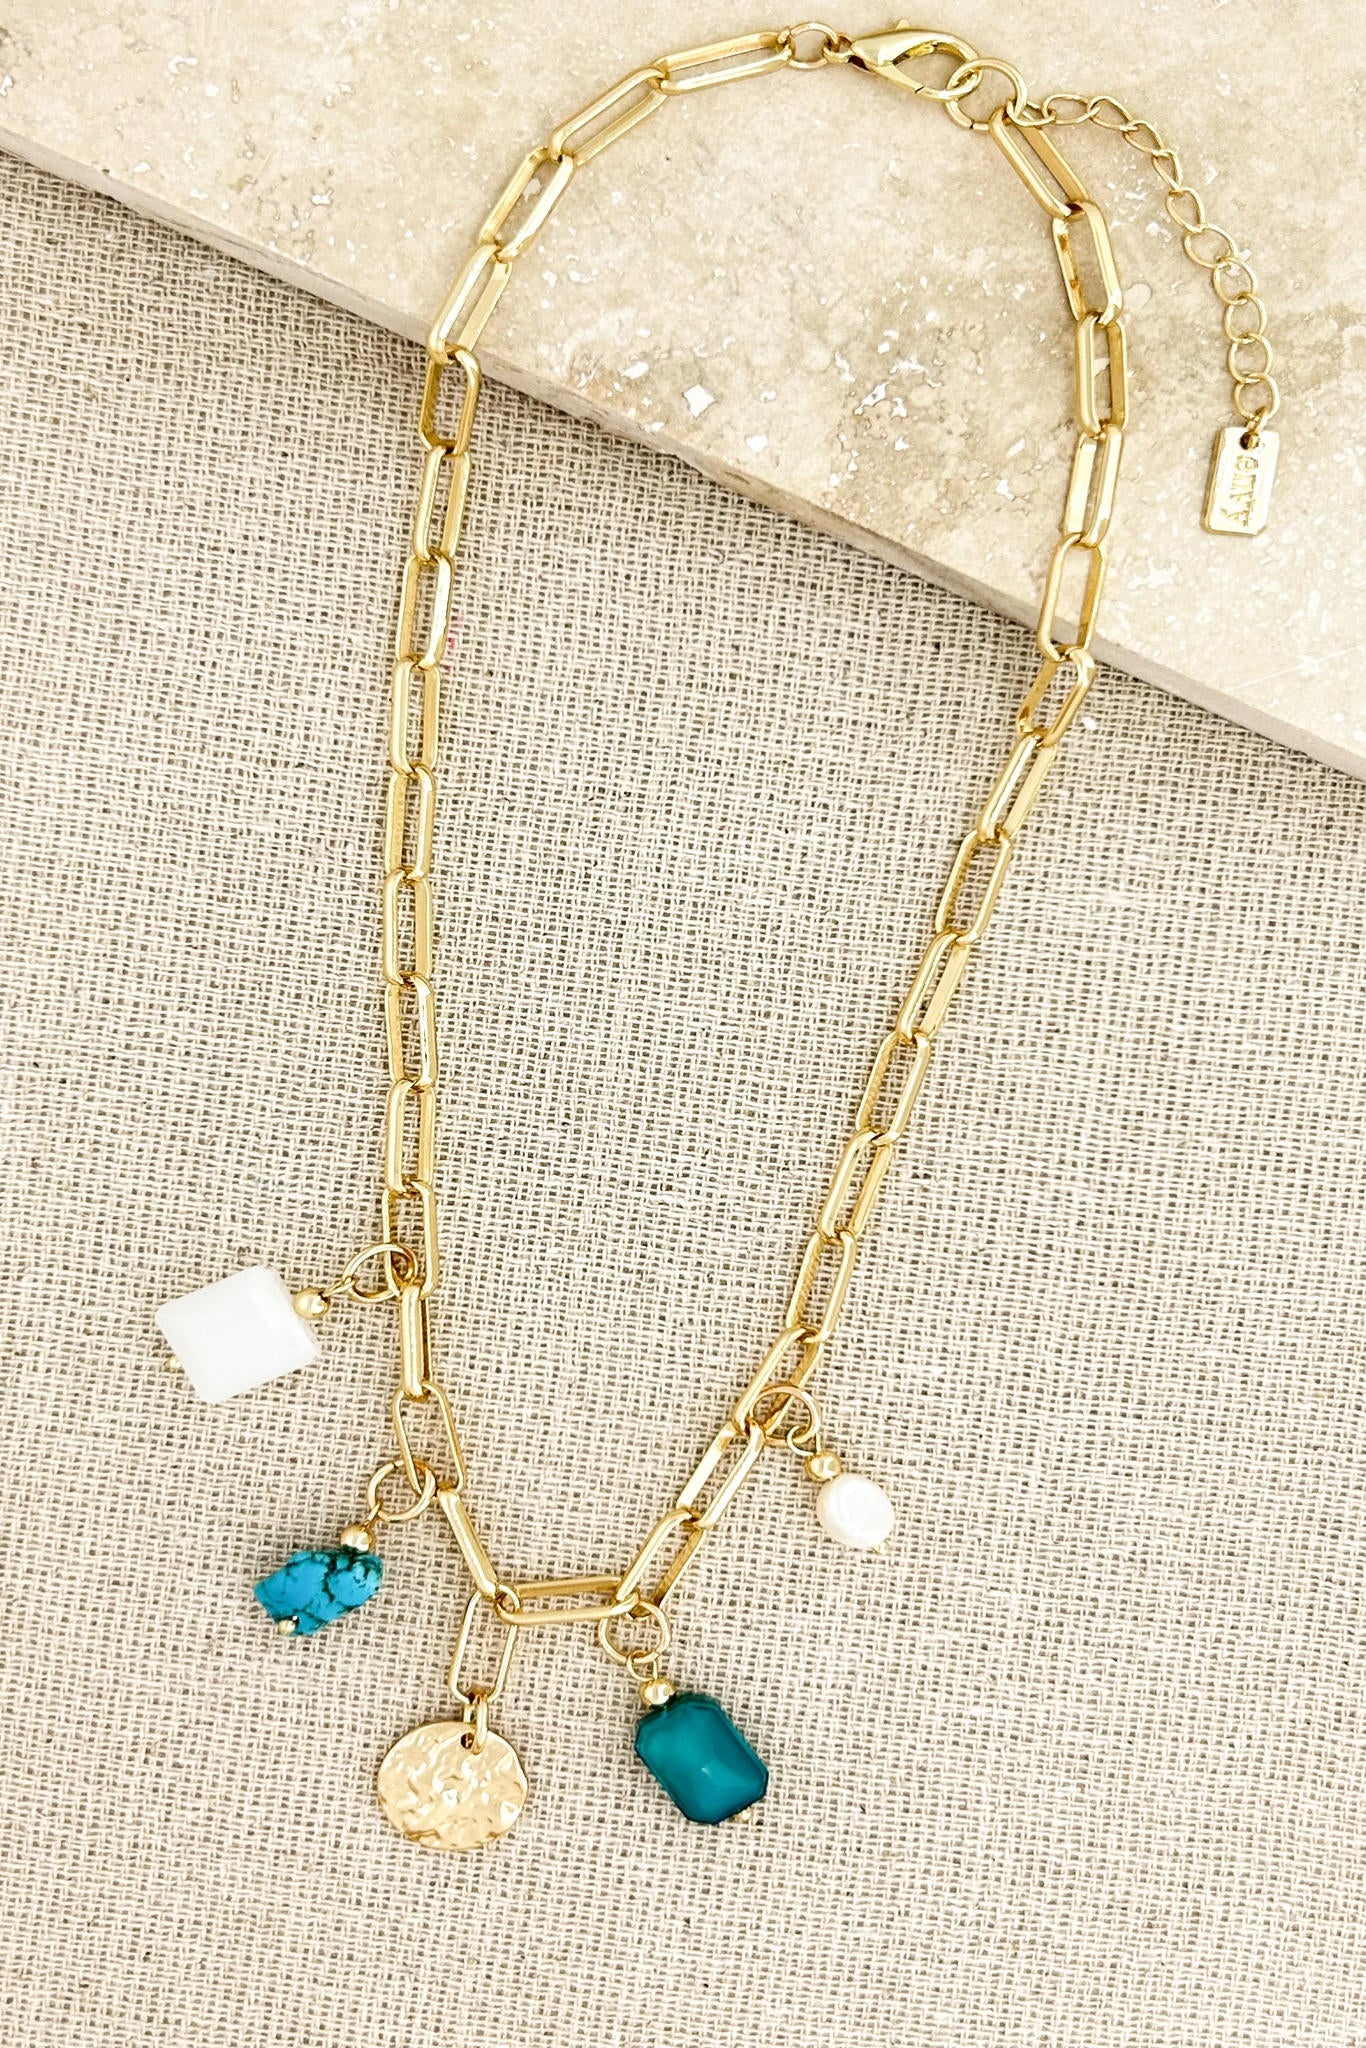 Gold, Blue & White Pendant Necklace